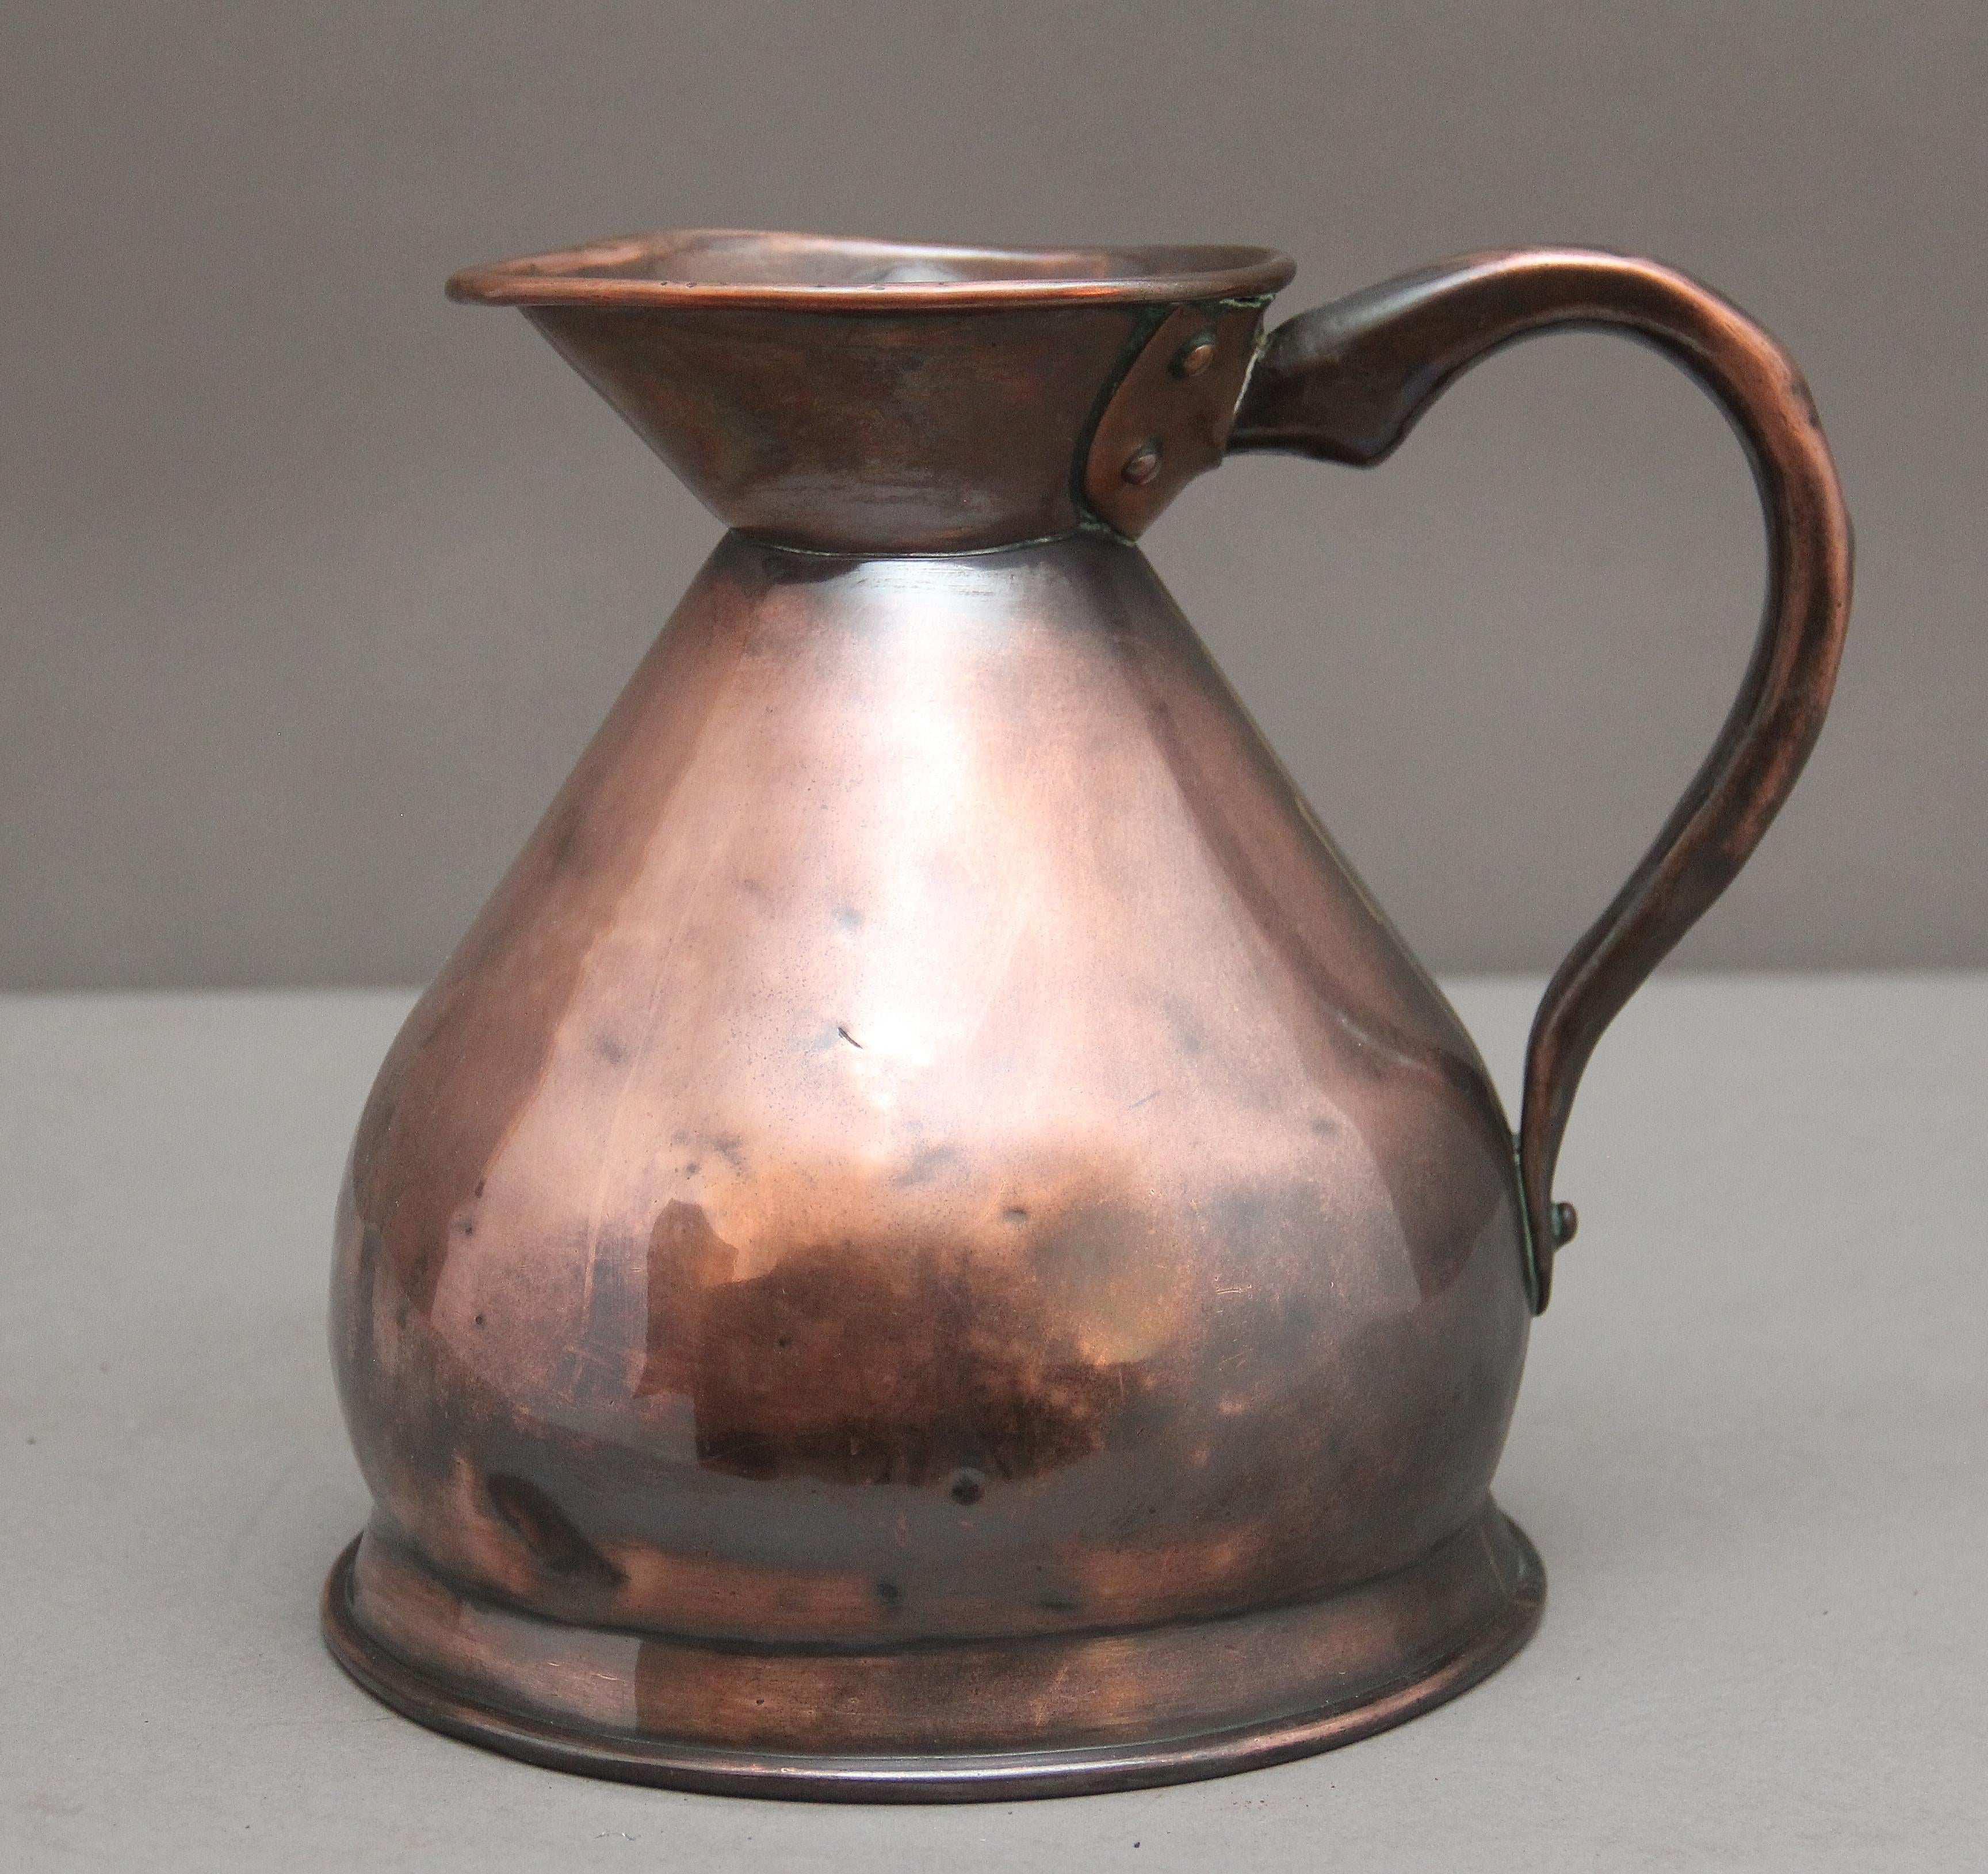 British 19th Century half gallon copper measuring jug